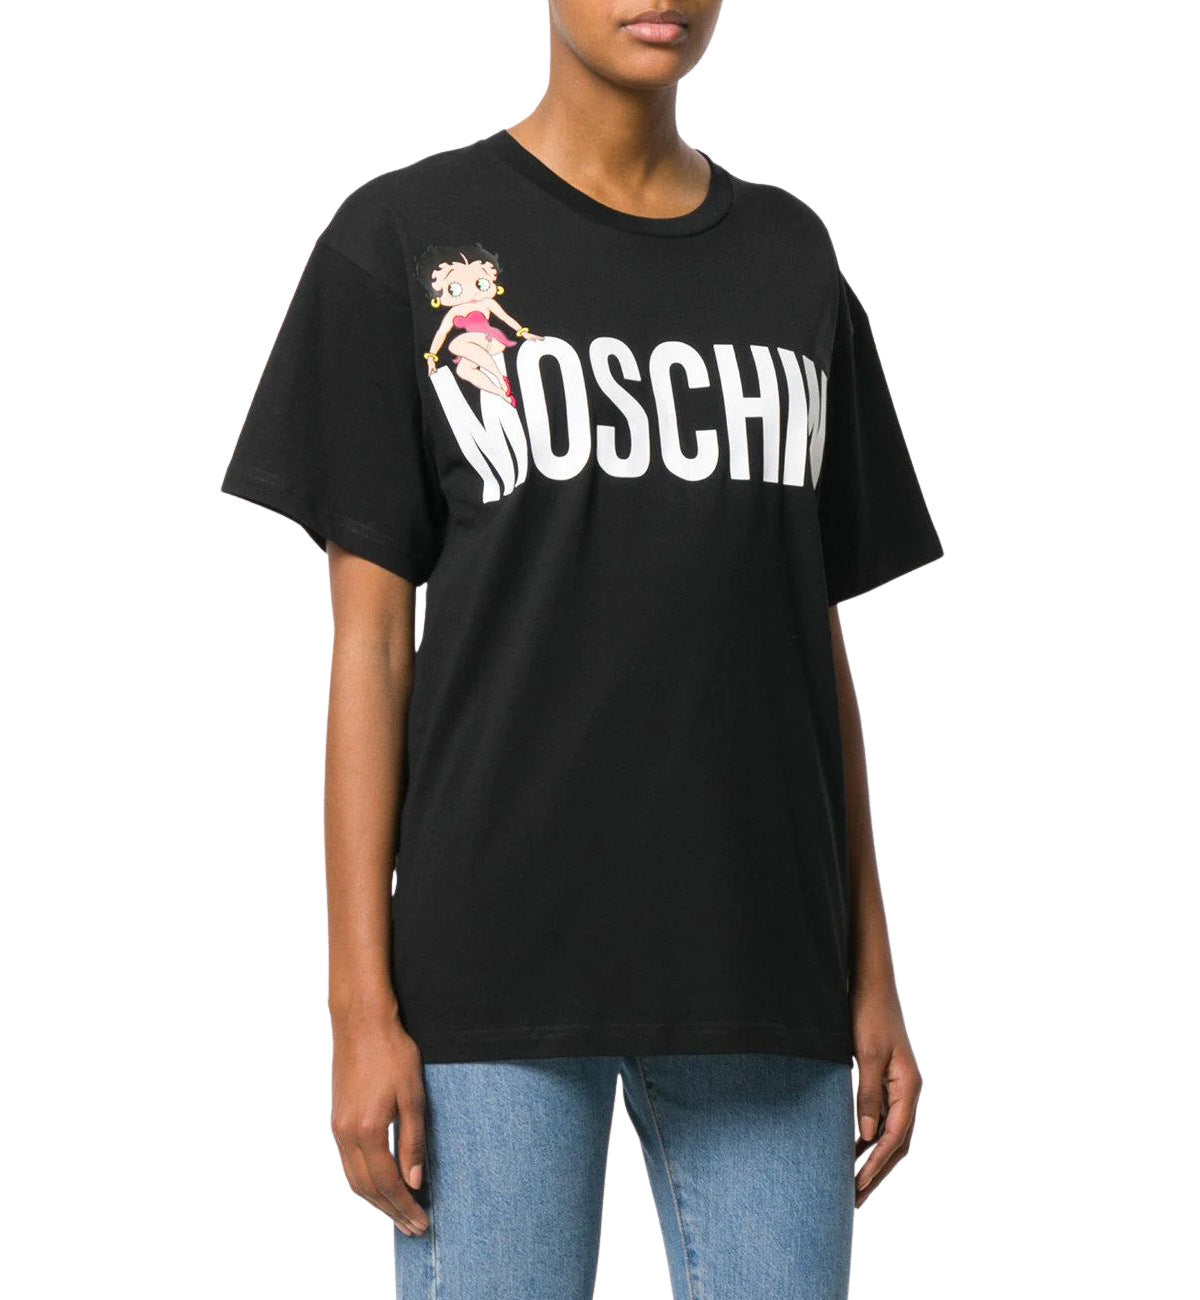 Moschino Betty Boop Printed T-Shirt (Black)